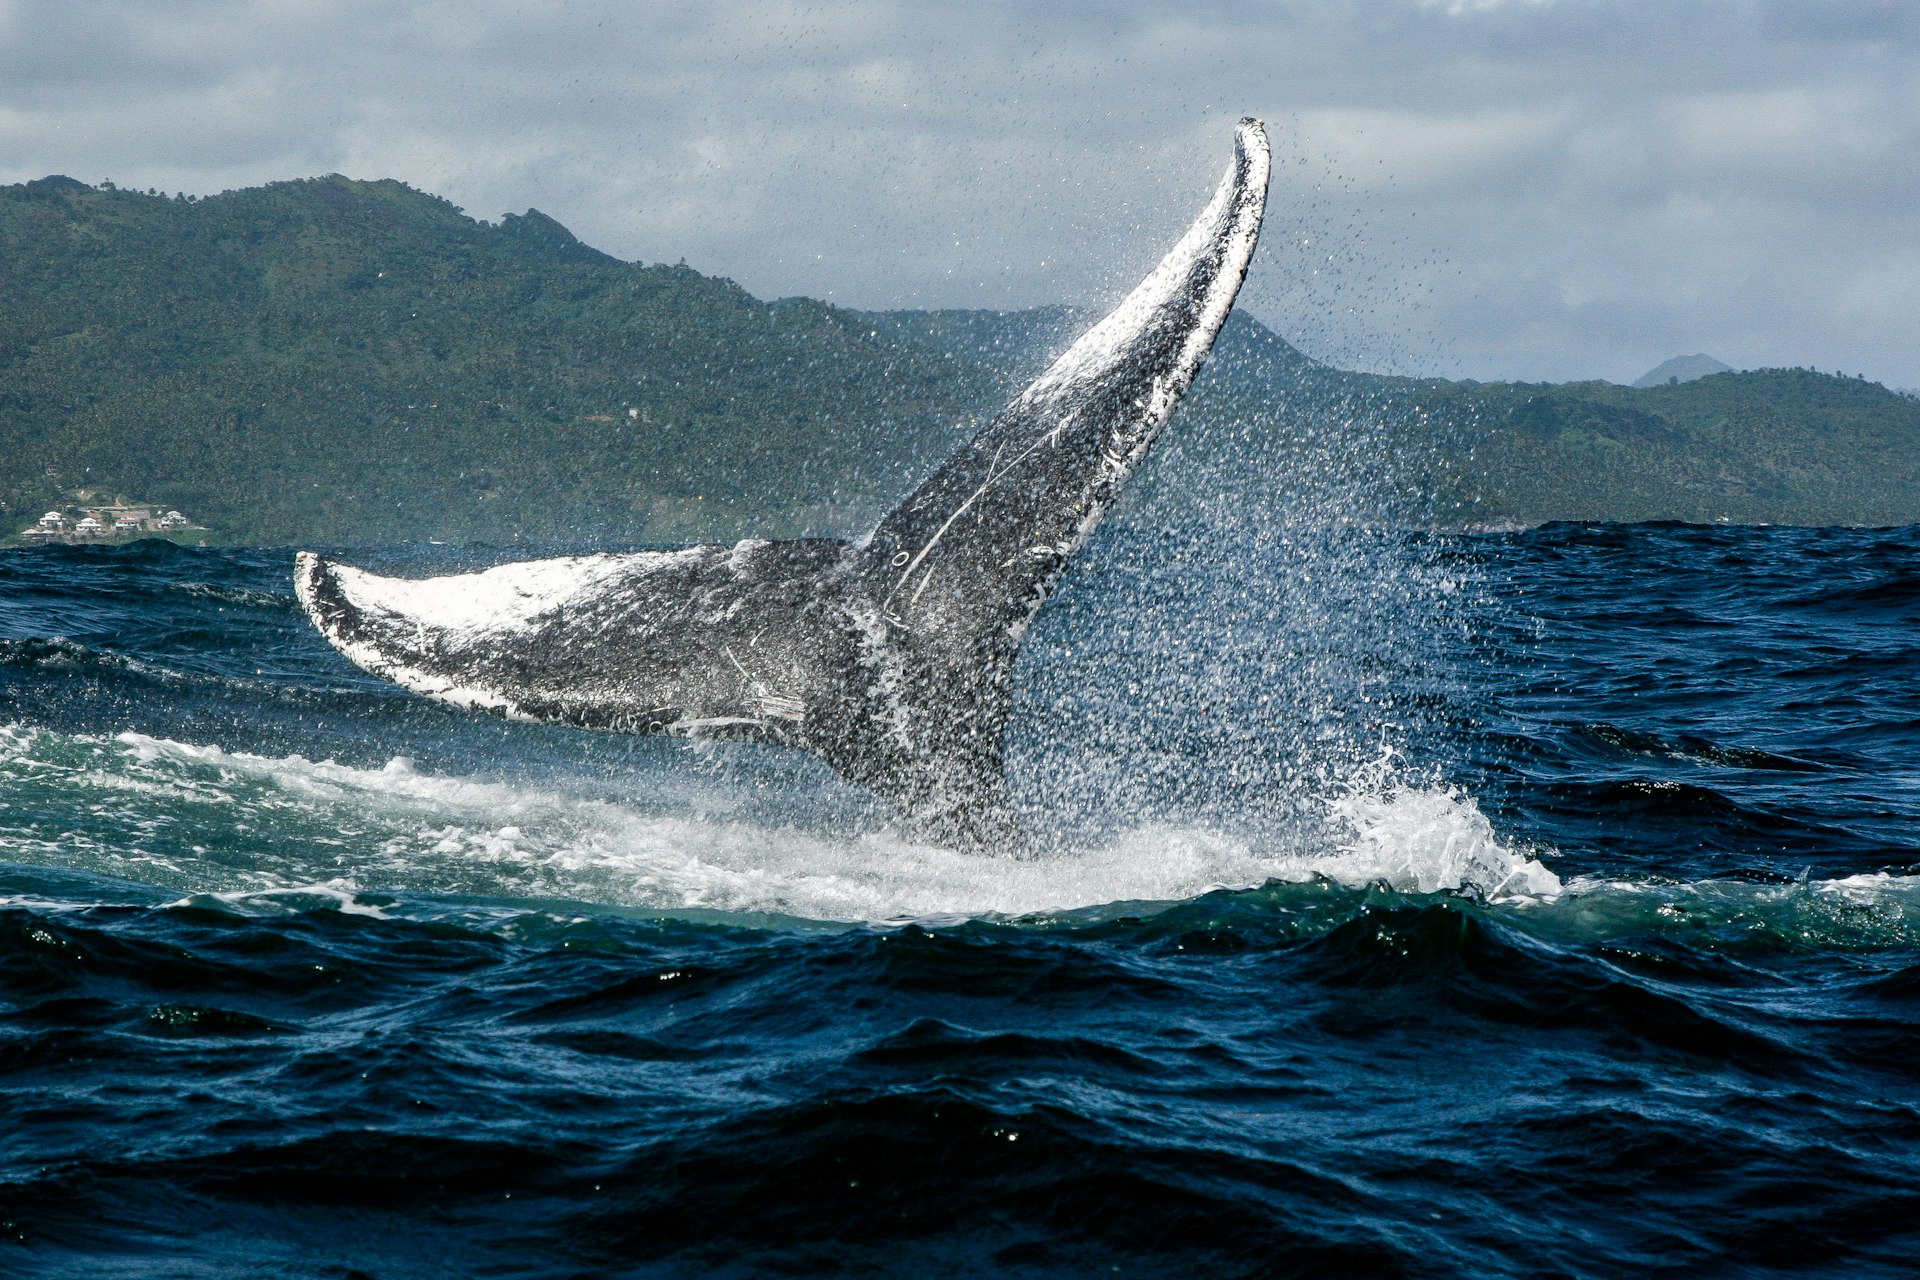 A closeup of a humpback whale tail off the coast near Samana in the Dominican Republic